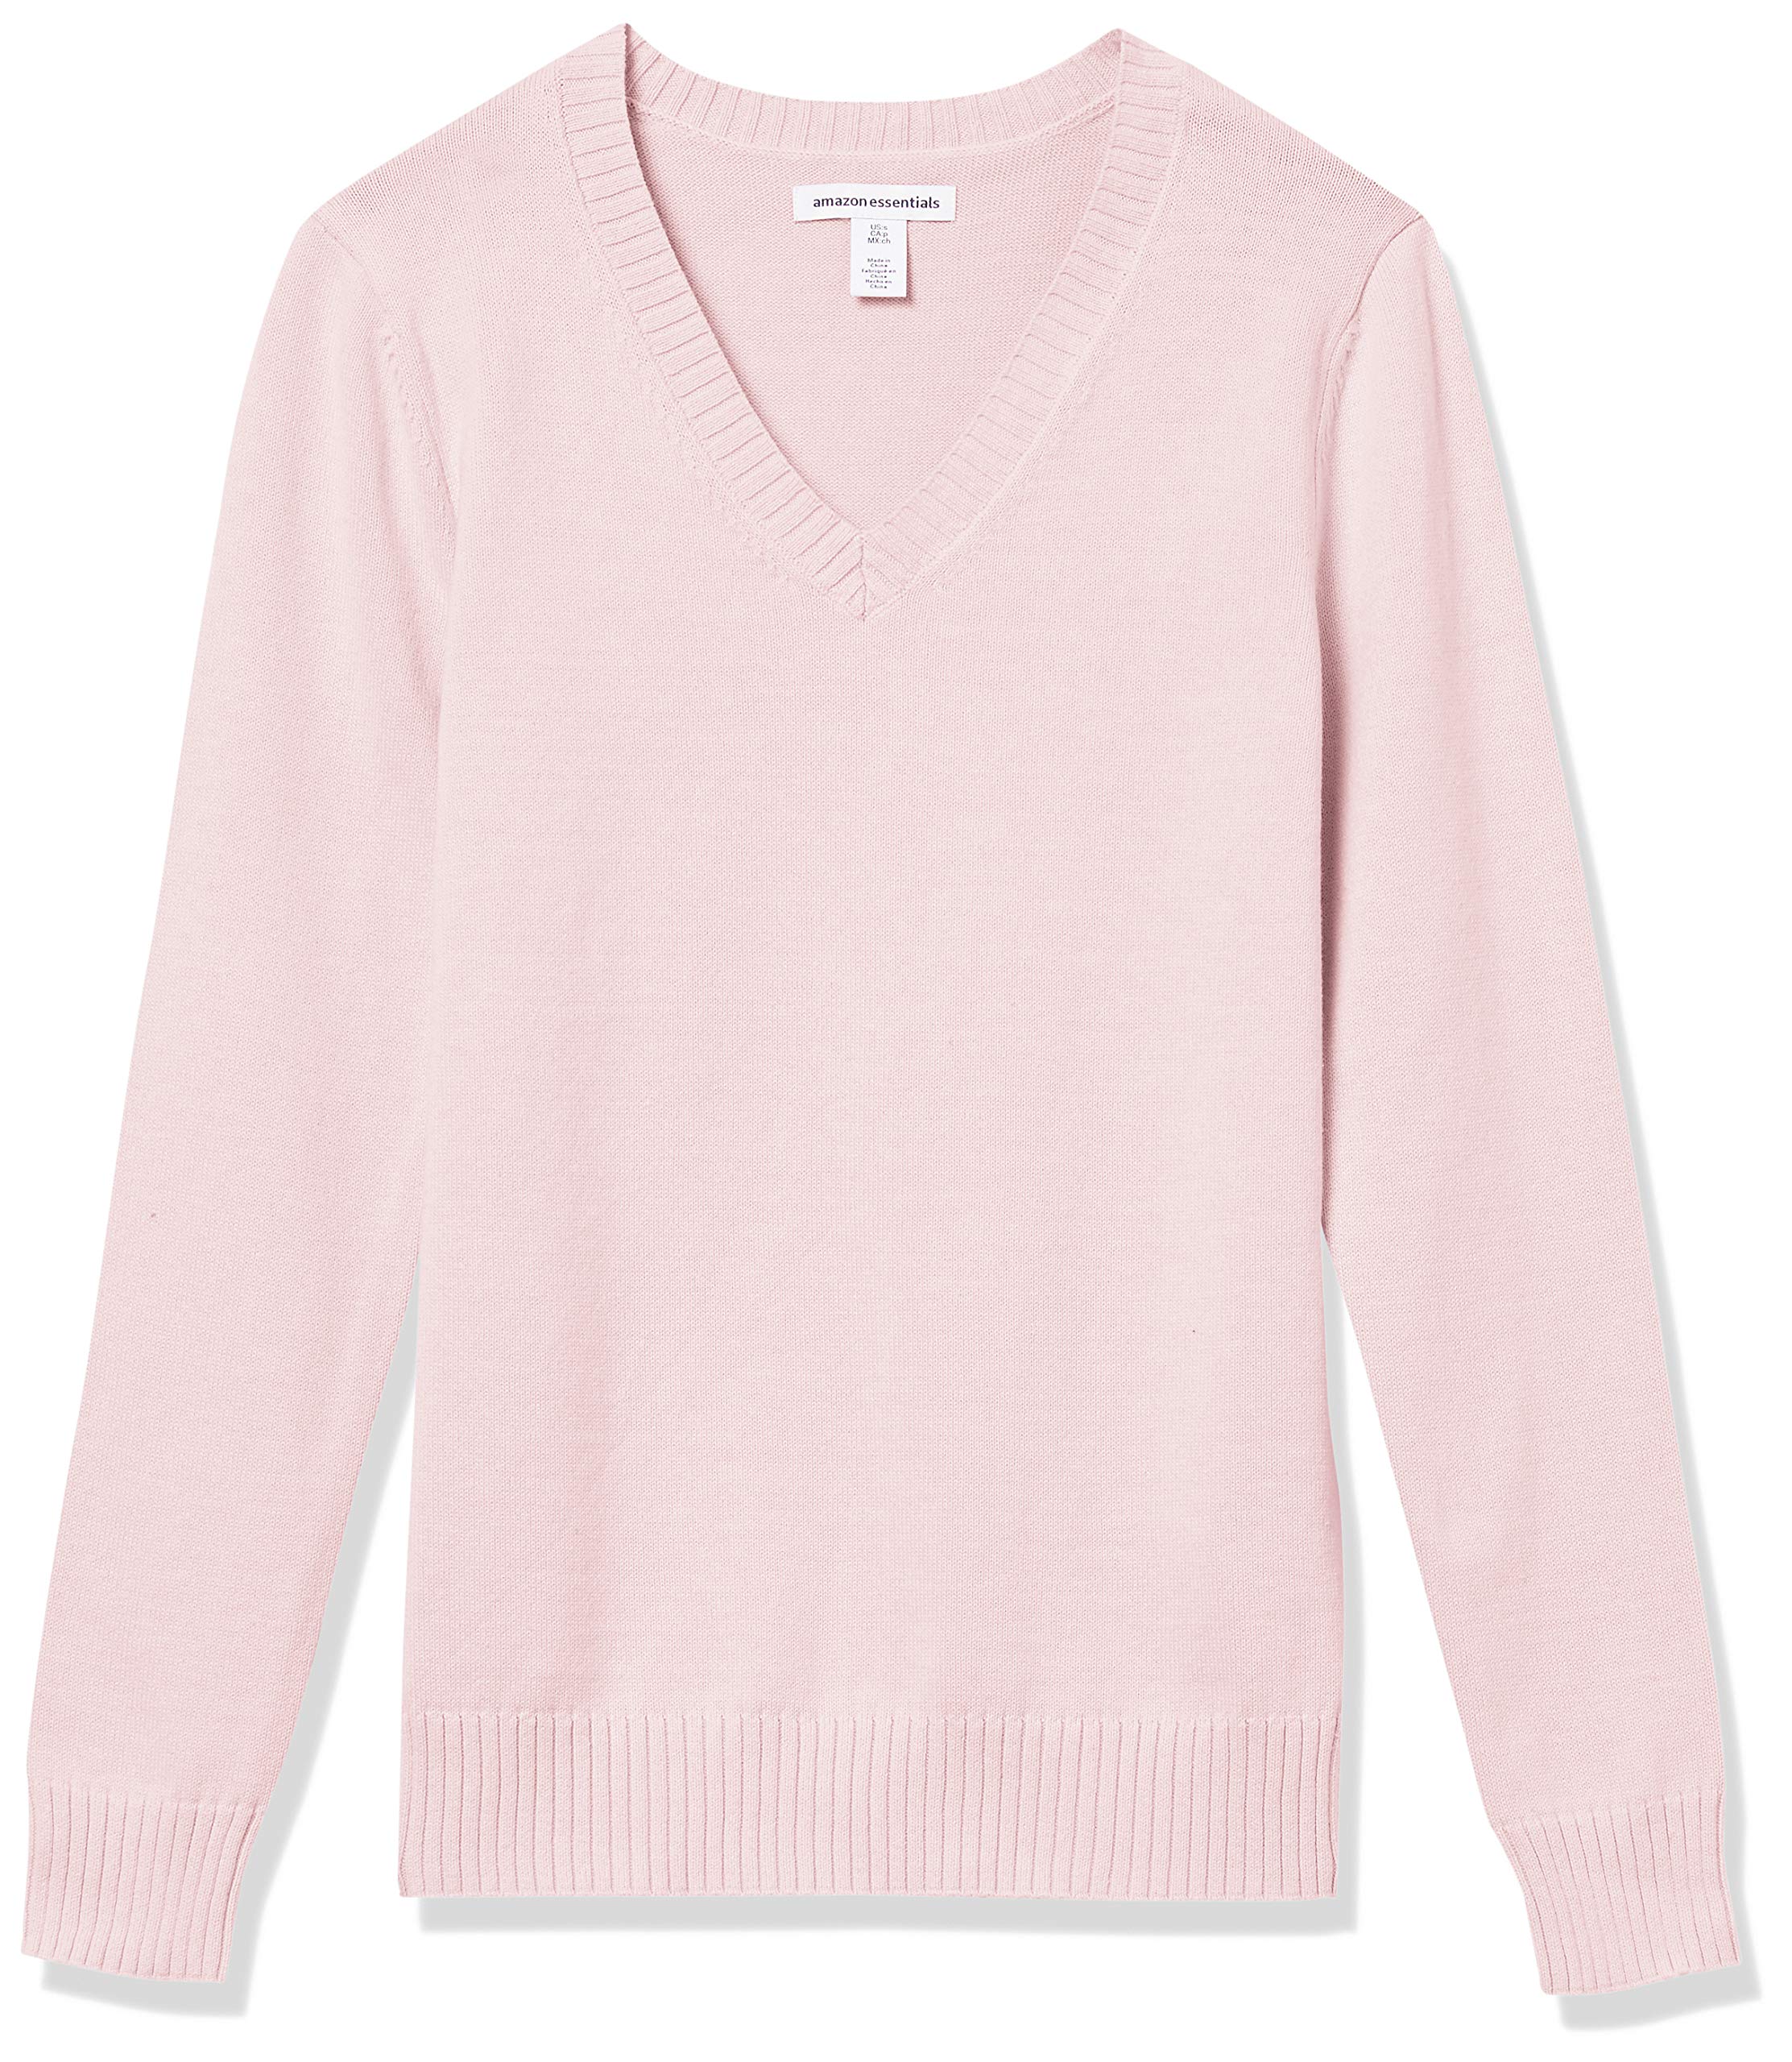 Amazon Essentials Women's 100% Cotton Long-Sleeve V-Neck Sweater